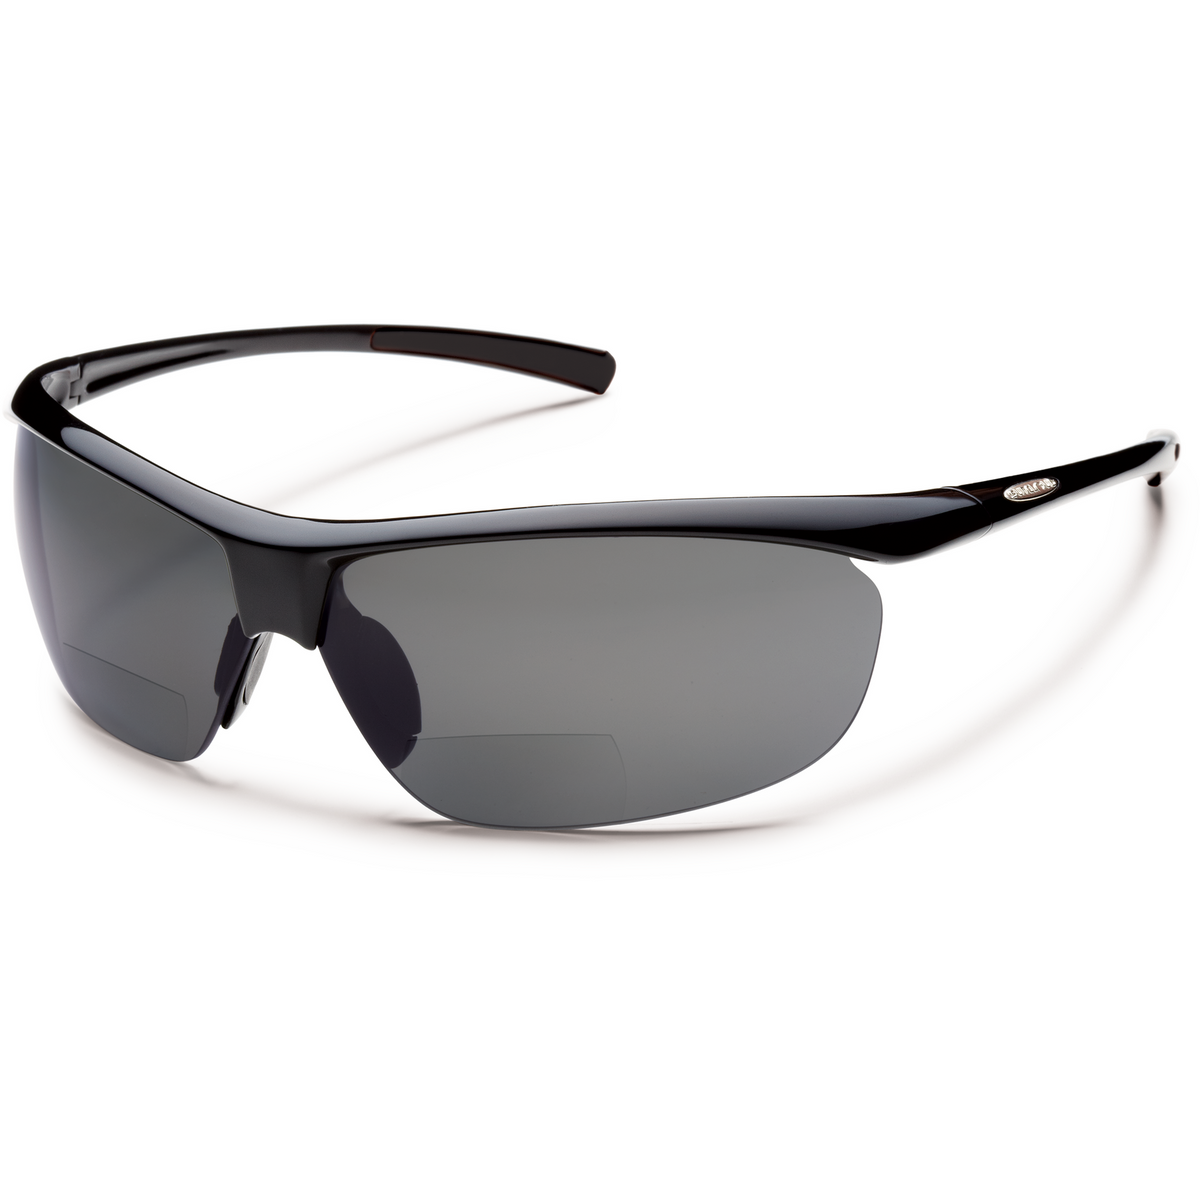 Suncloud Zephyr Reader Sunglasses